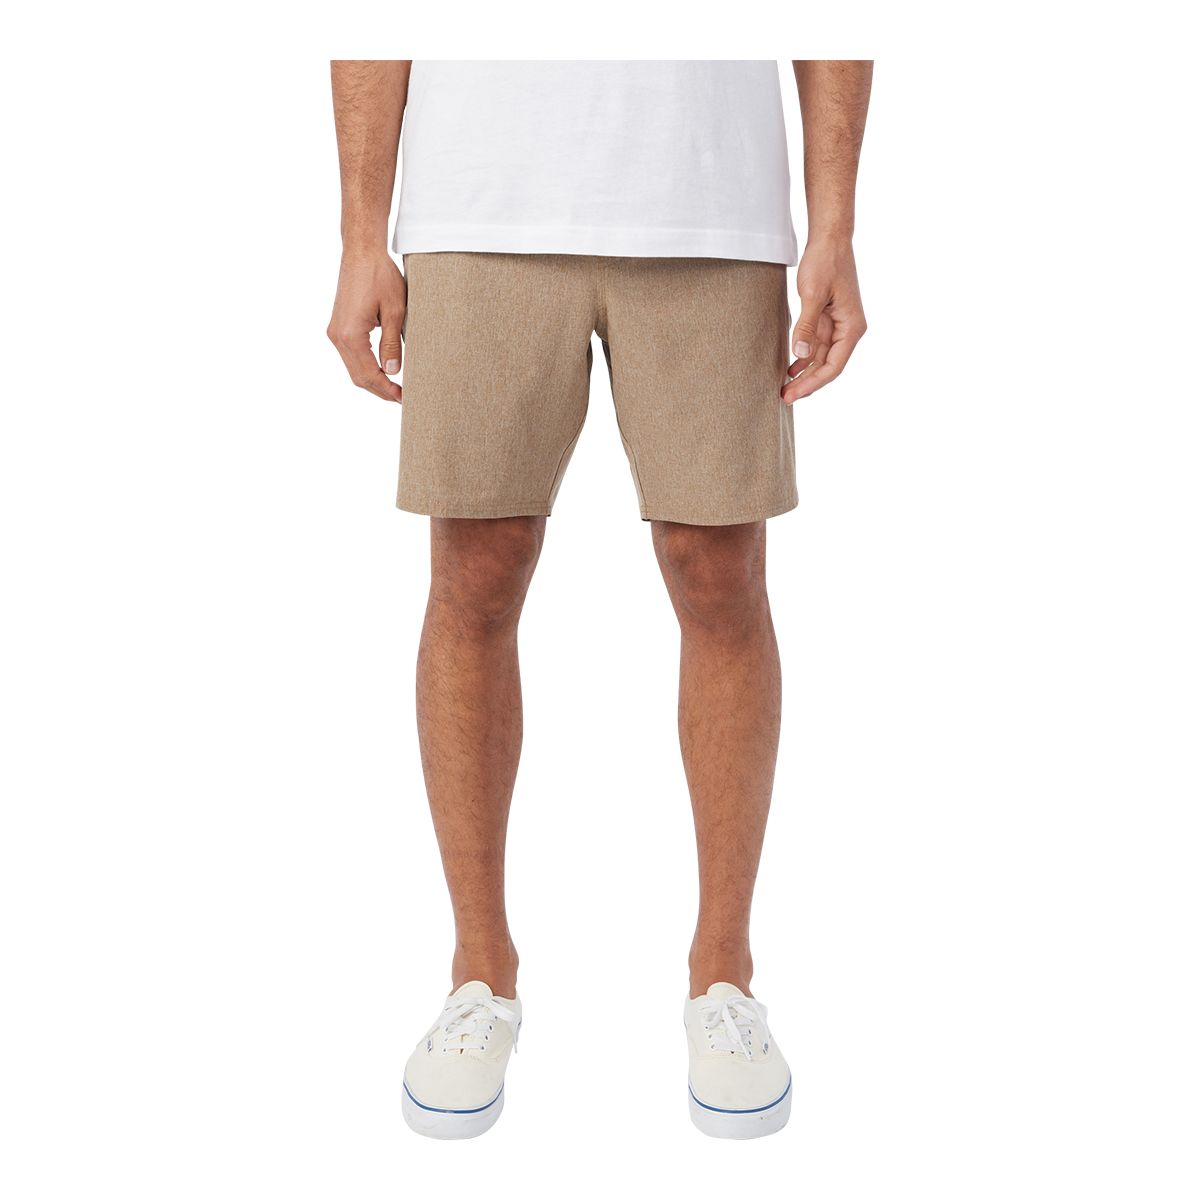 Image of O'Neill Men's Reserve E-Waist 18 Inch Hybrid Shorts